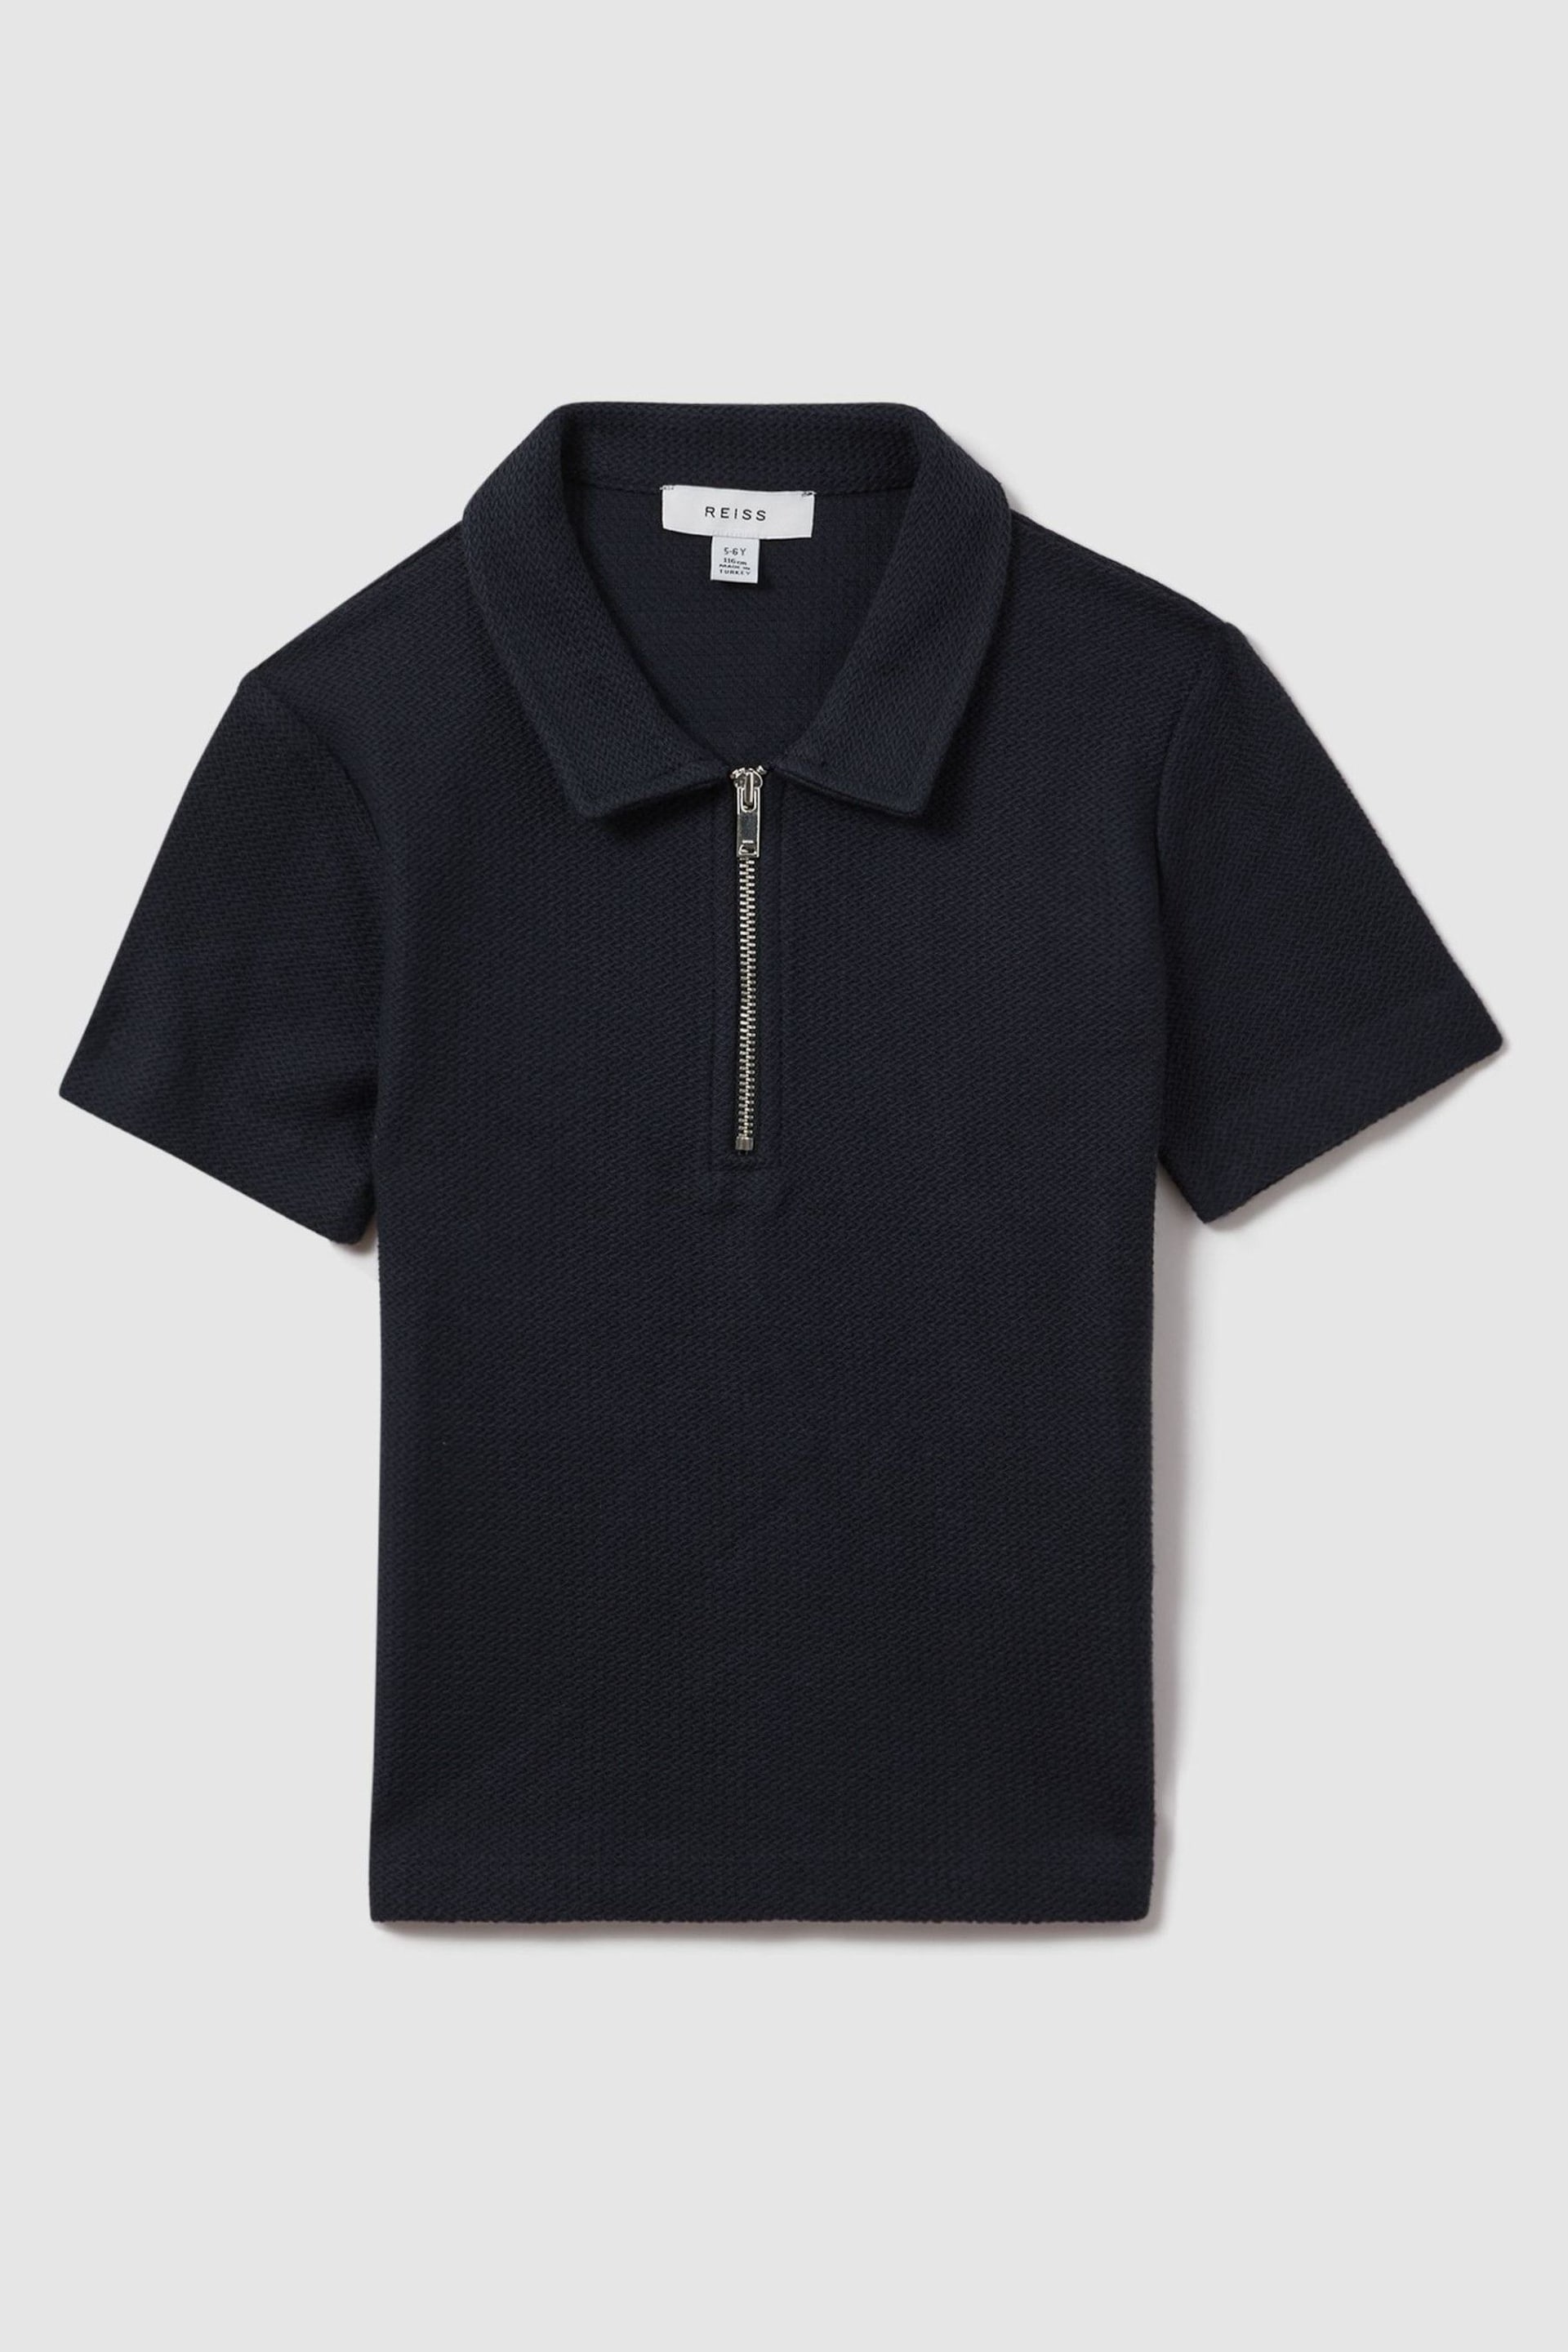 Reiss Navy Felix Junior Textured Cotton Half-Zip Polo Shirt - Image 2 of 4